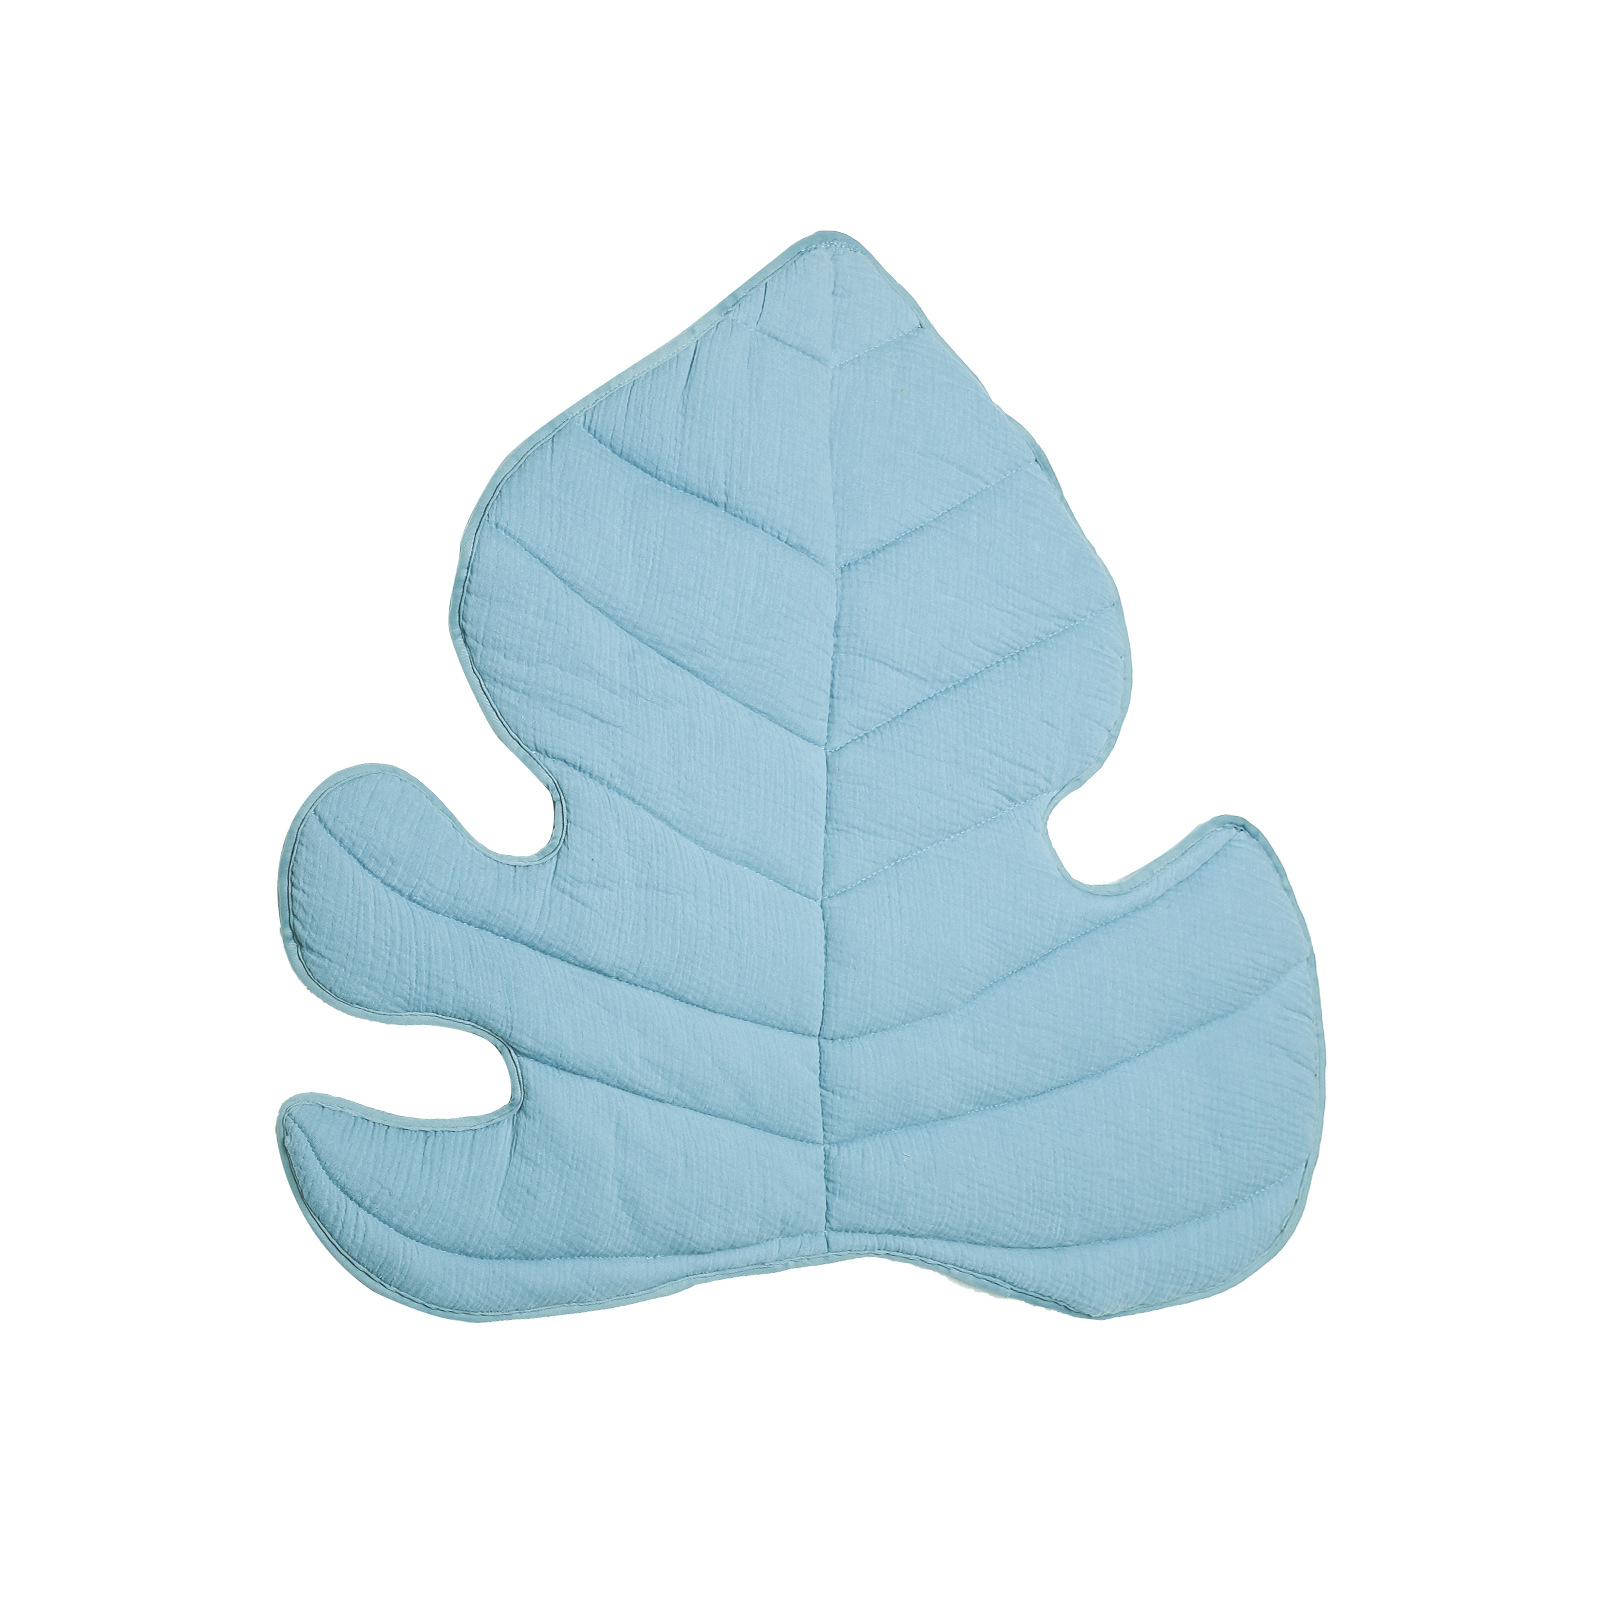 Turtle back leaf cushion, blue